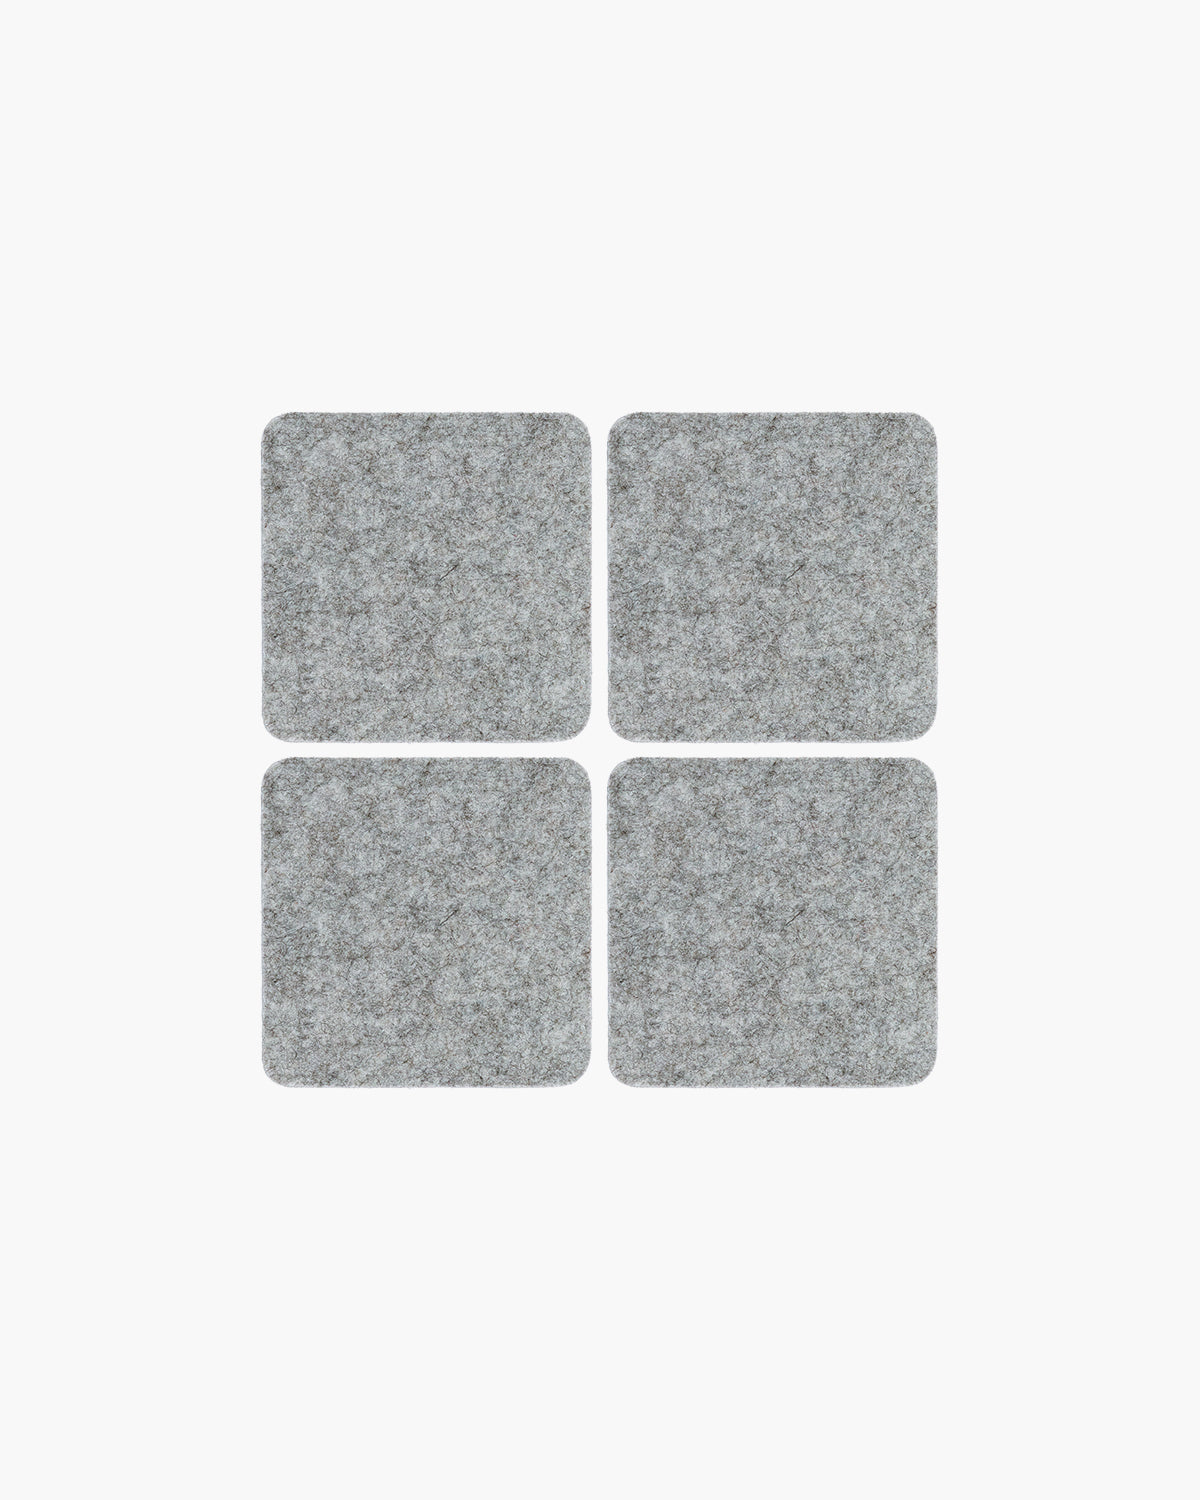 7 5/8 Square Elegant Cut Wool Felt Table Protector Mat 5mm 